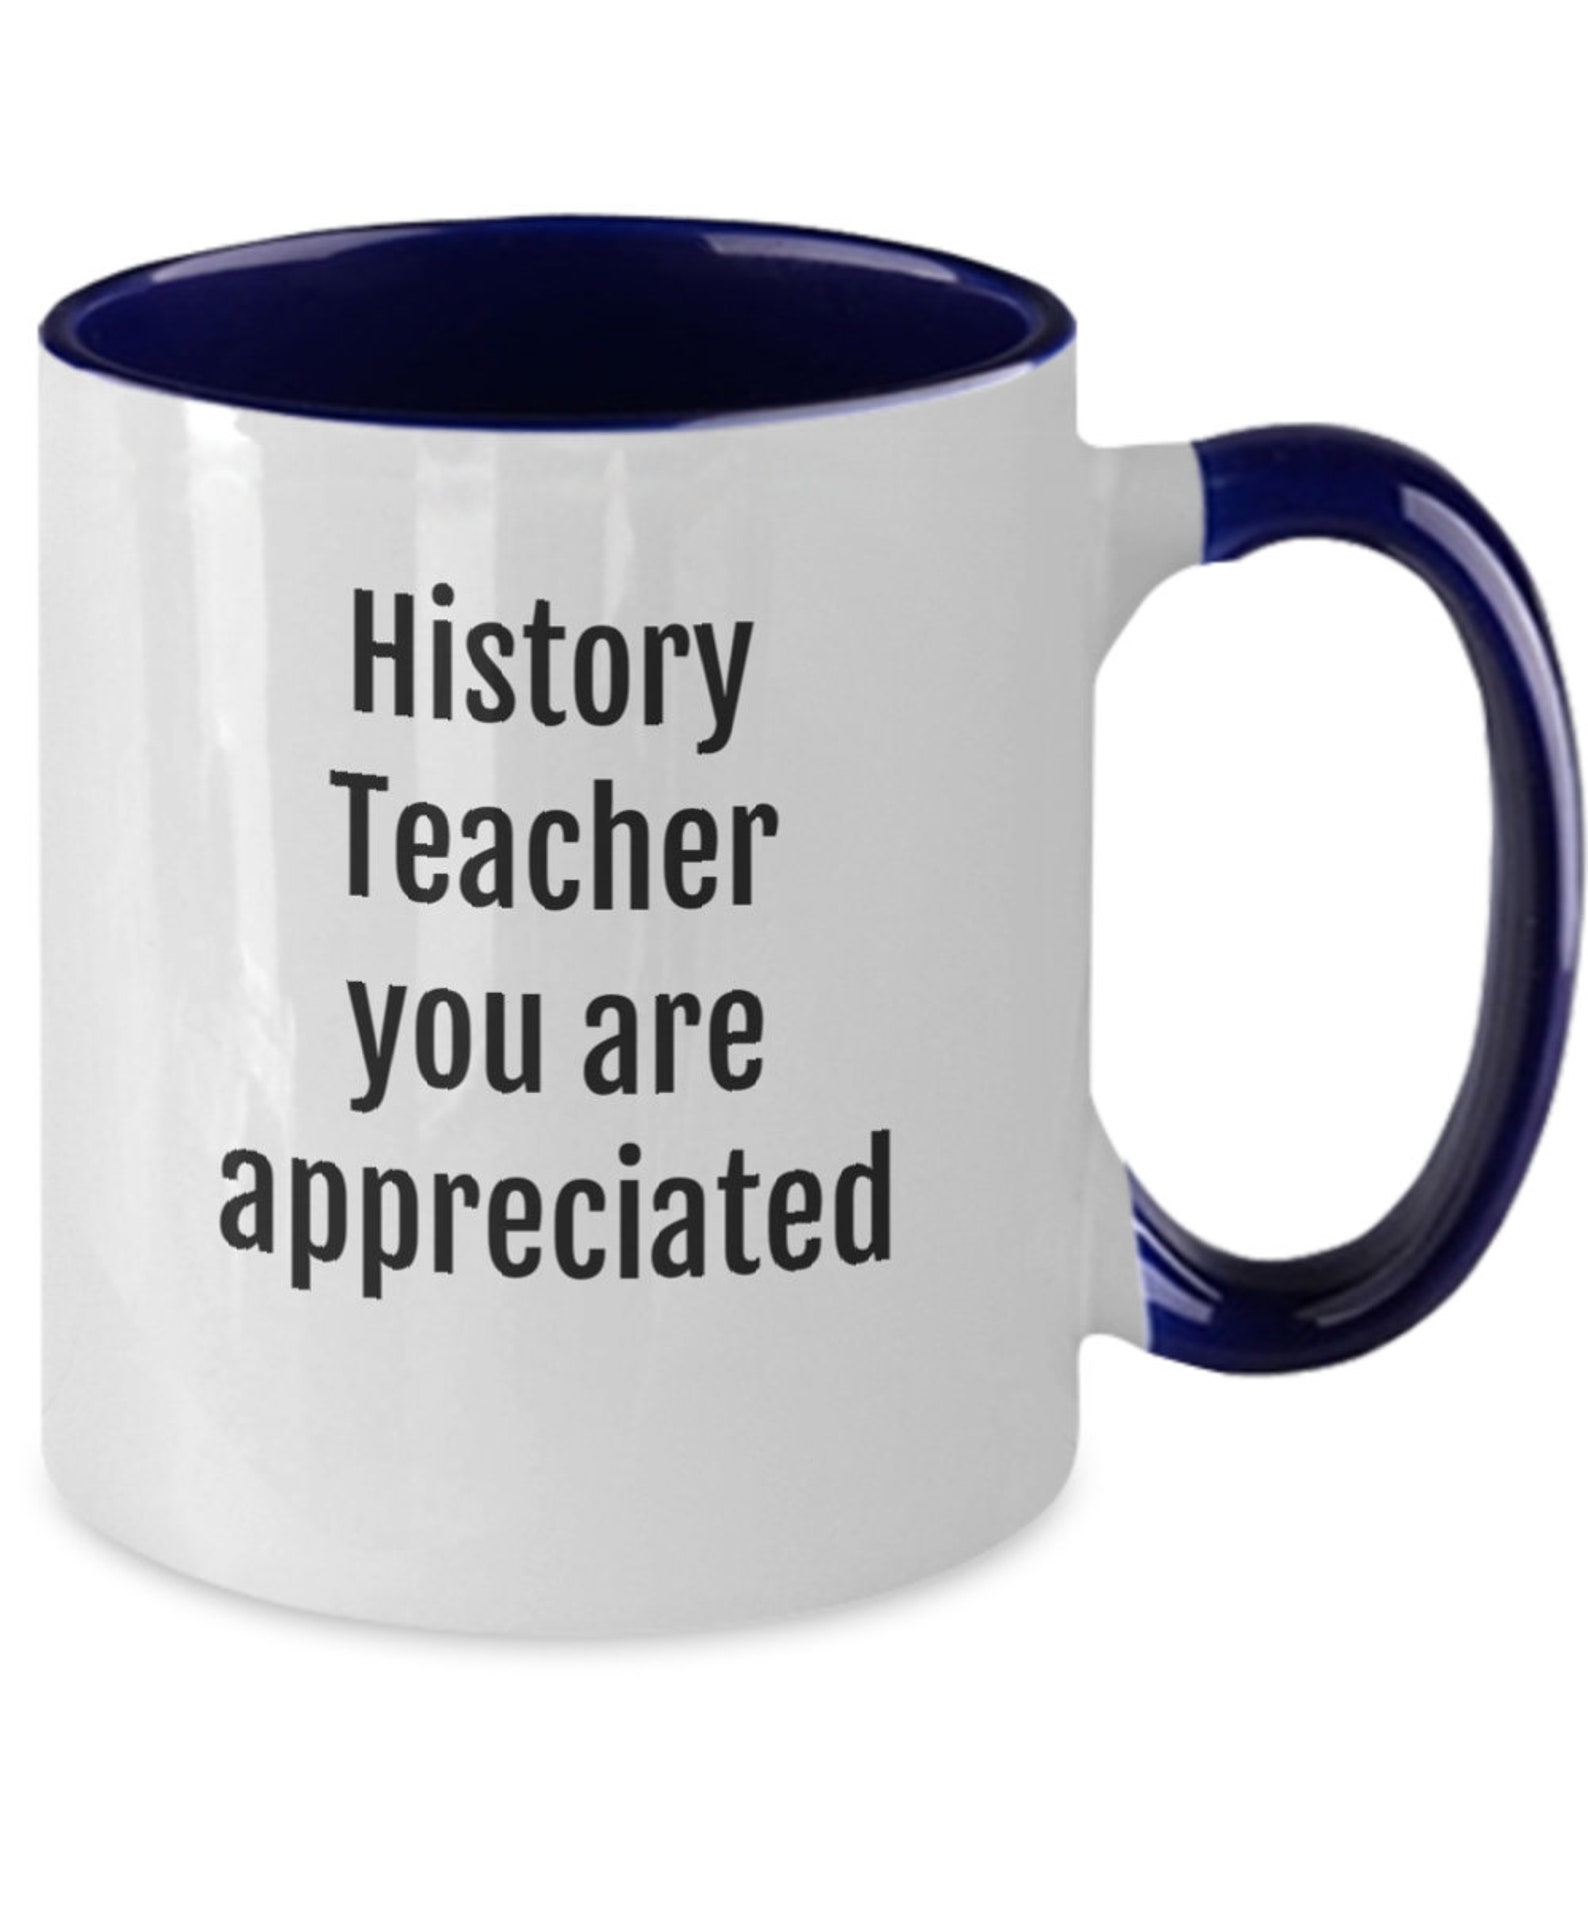 History teacher appreciation mug gift for history teacher